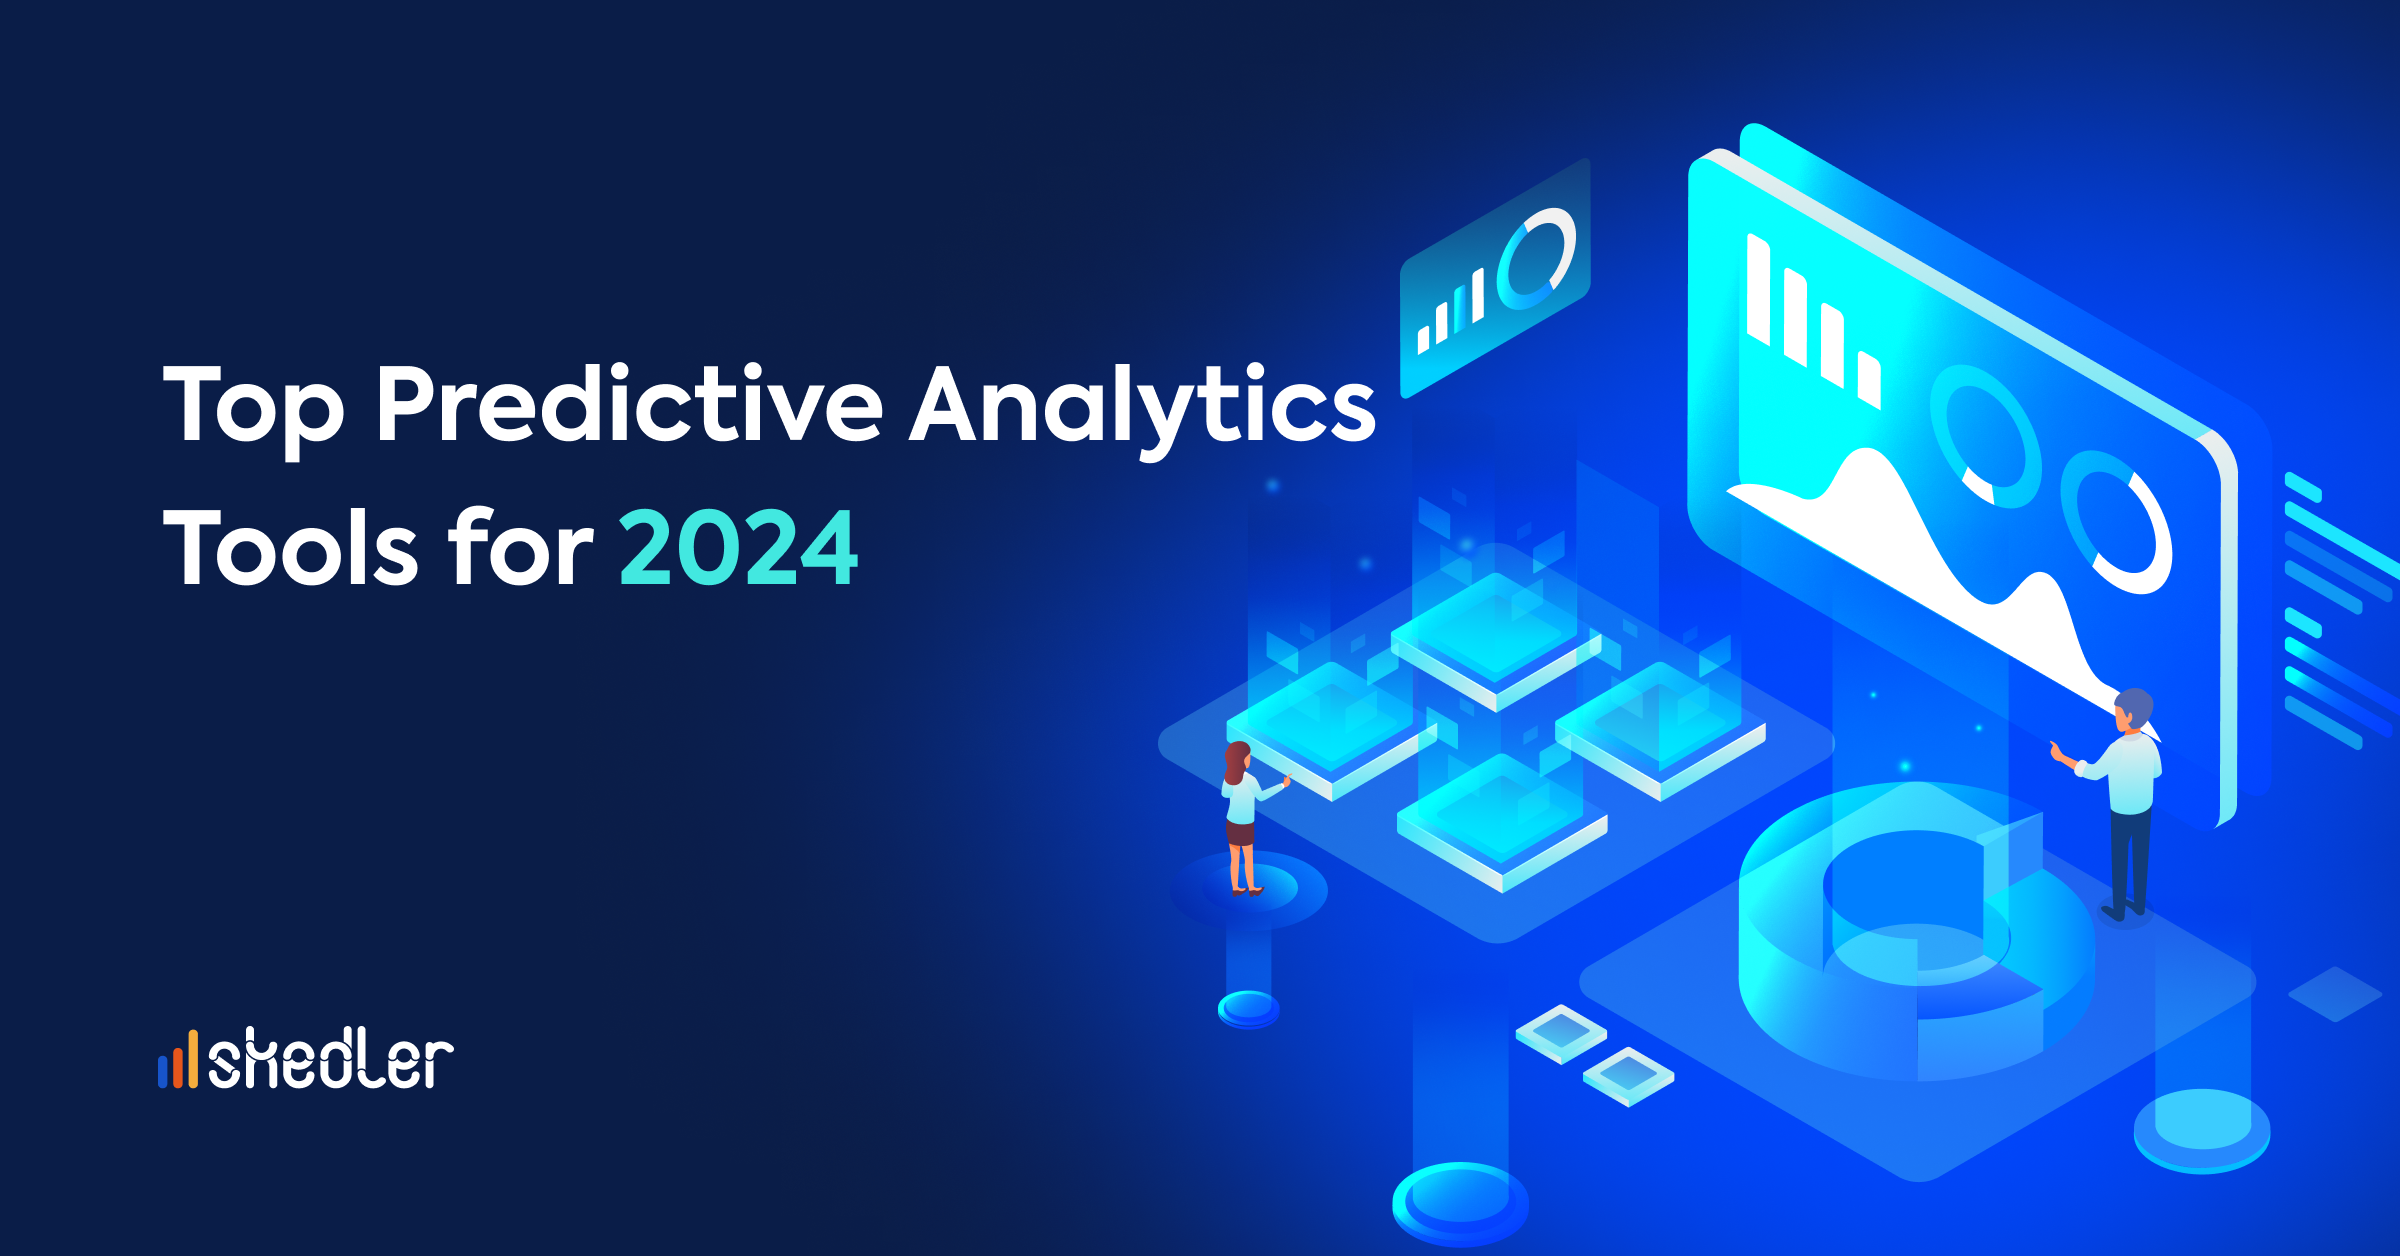 Top Predictive Analytics Tools for 2024